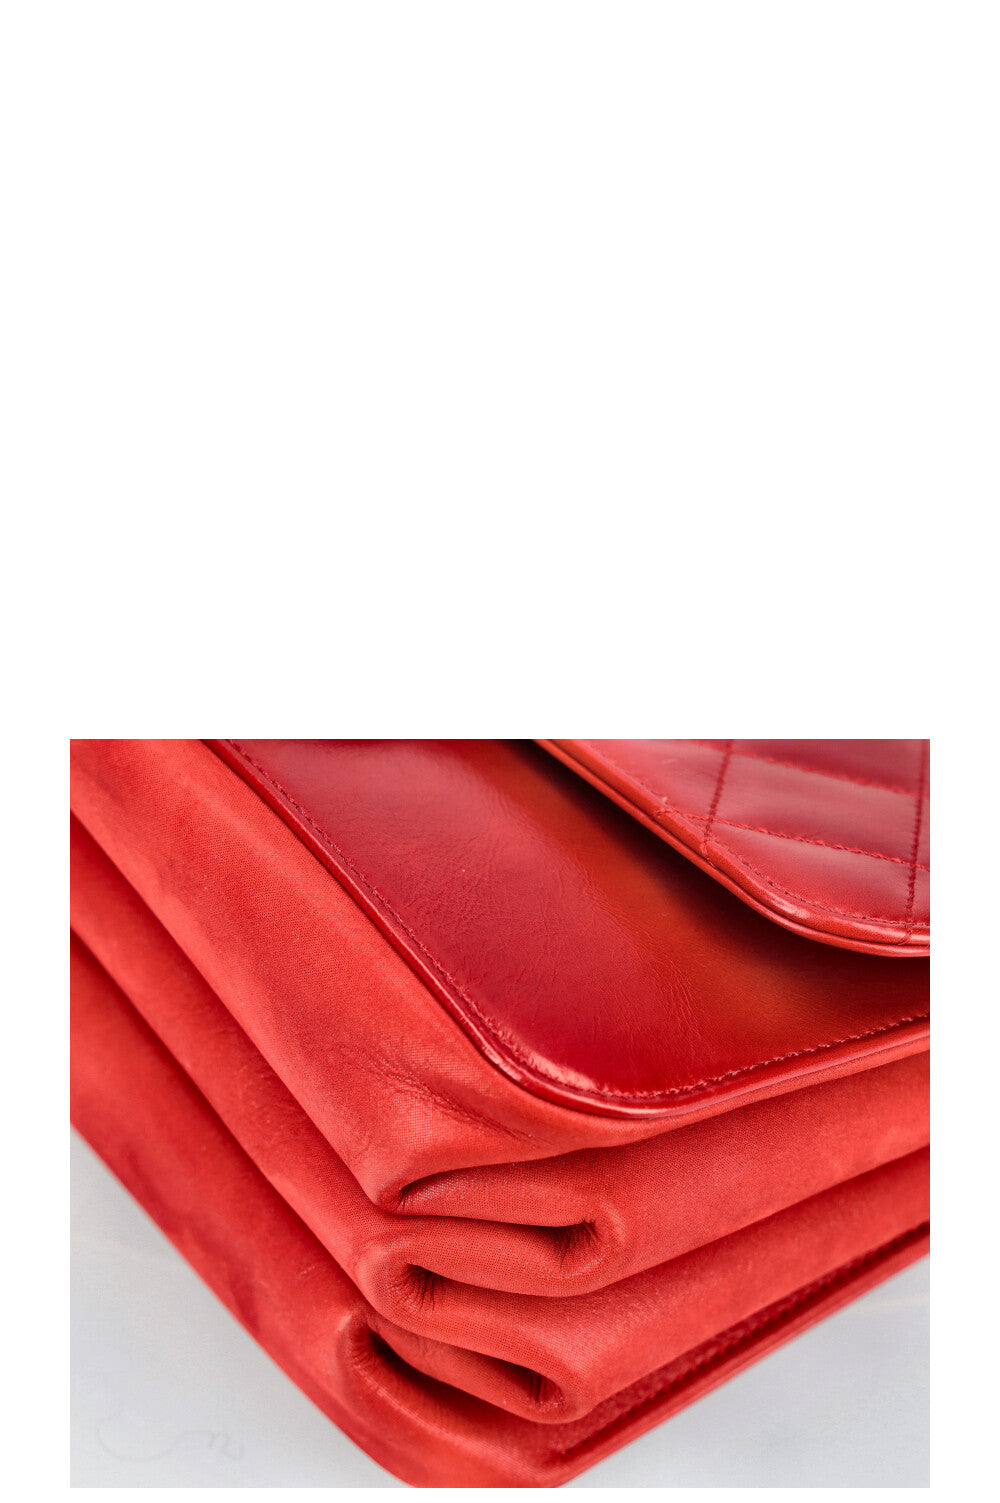 CHANEL Paris Cosmopolite Bag Small Red